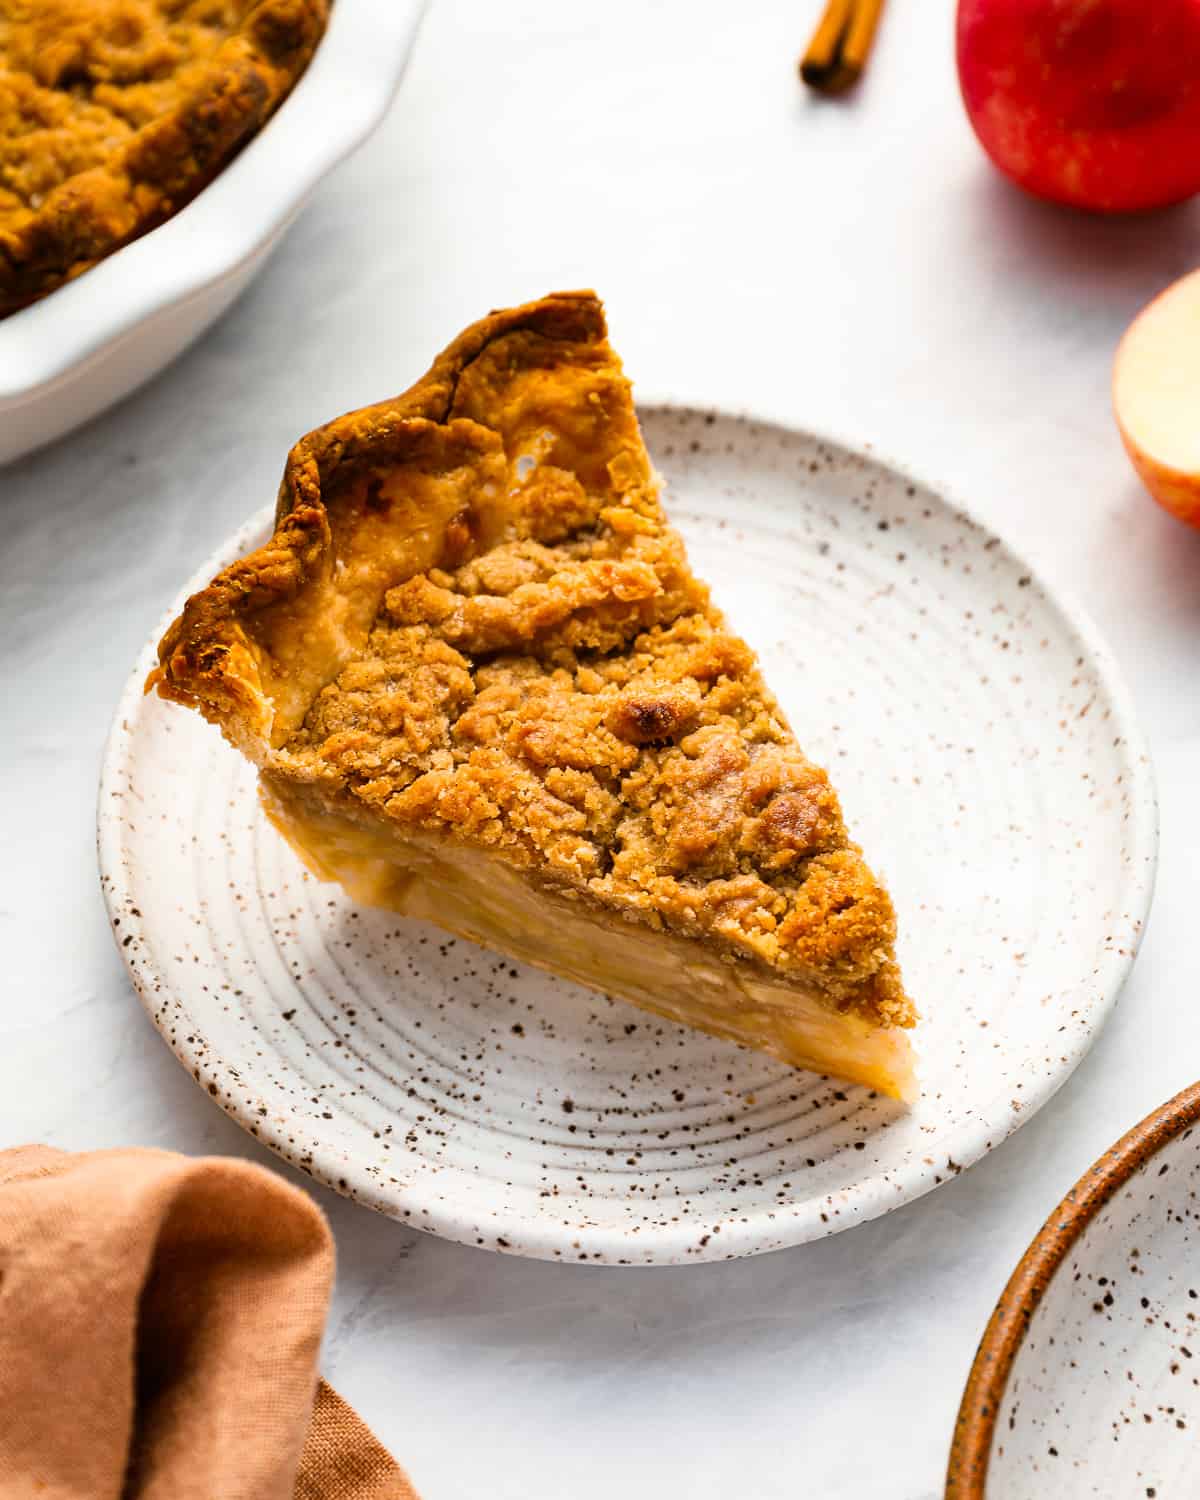 A slice of Dutch apple pie on a plate.